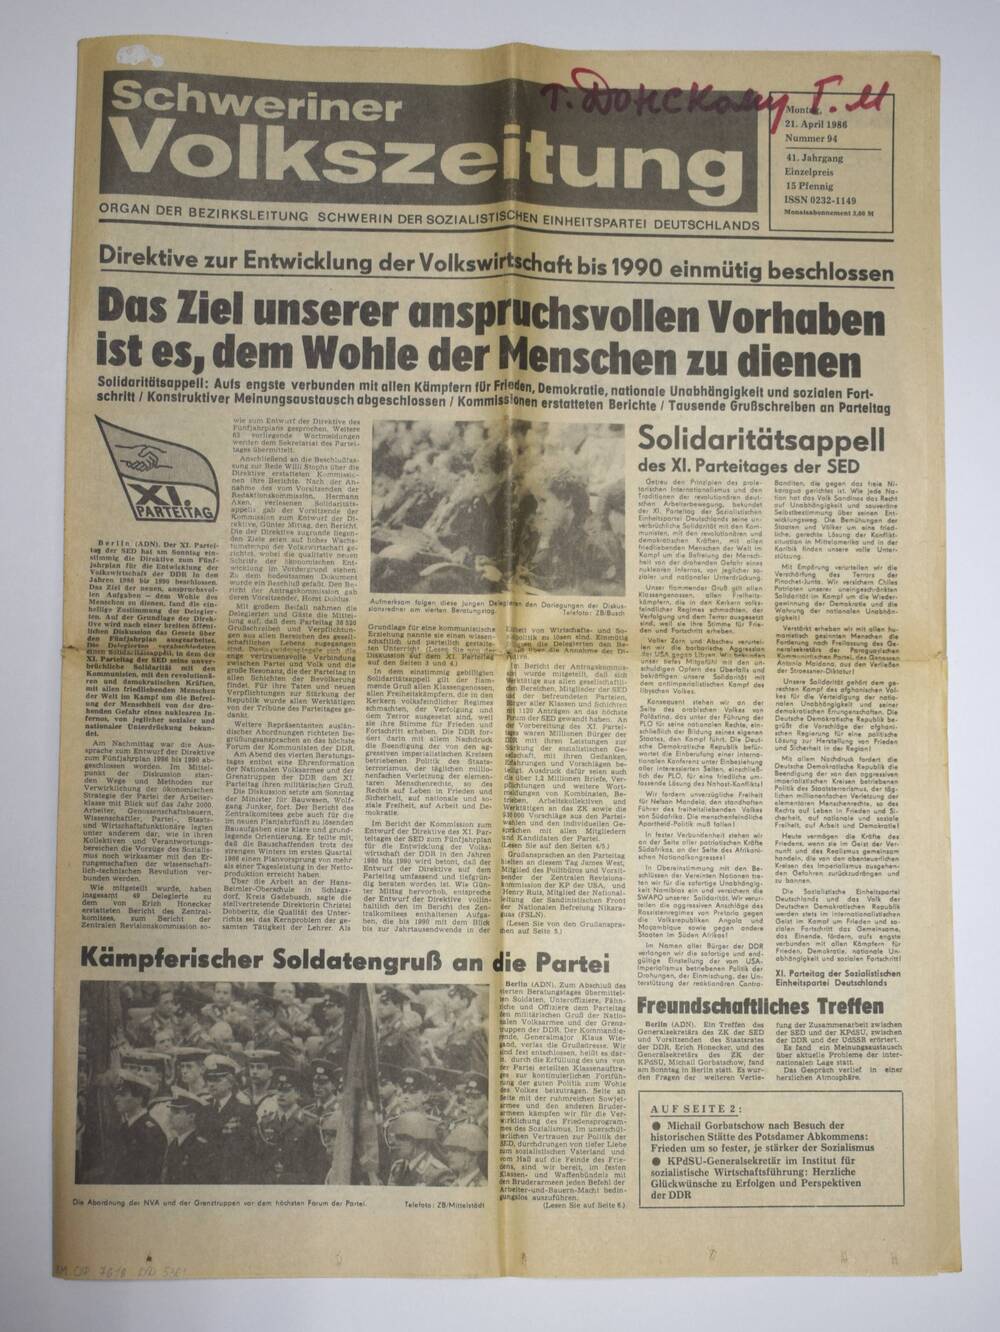 Газета Schweriner Volkszeitung № 94 от 21.04.1986 г. Статья о Горбачеве М.С.